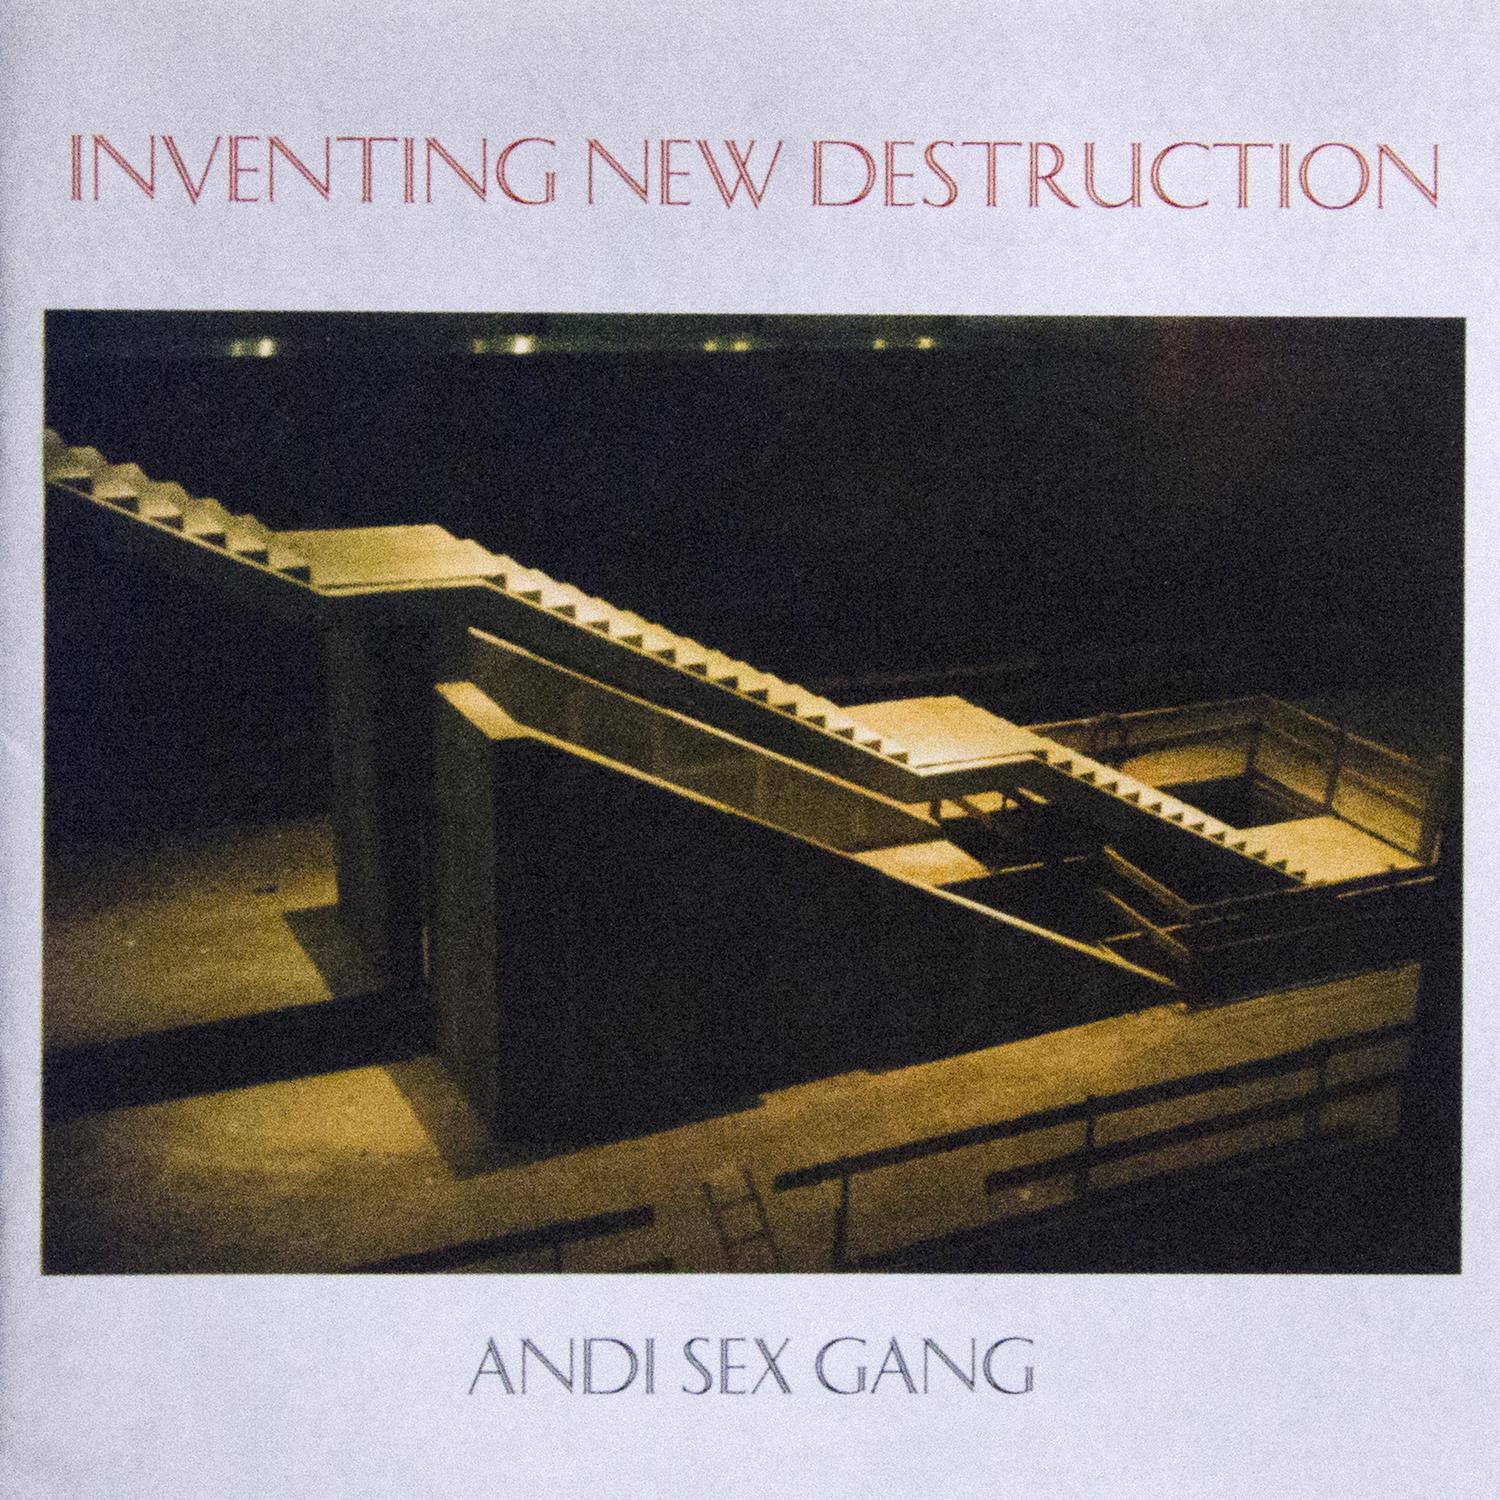 Andi Sex Gang - Optidog (A Certain Kind of Silence)